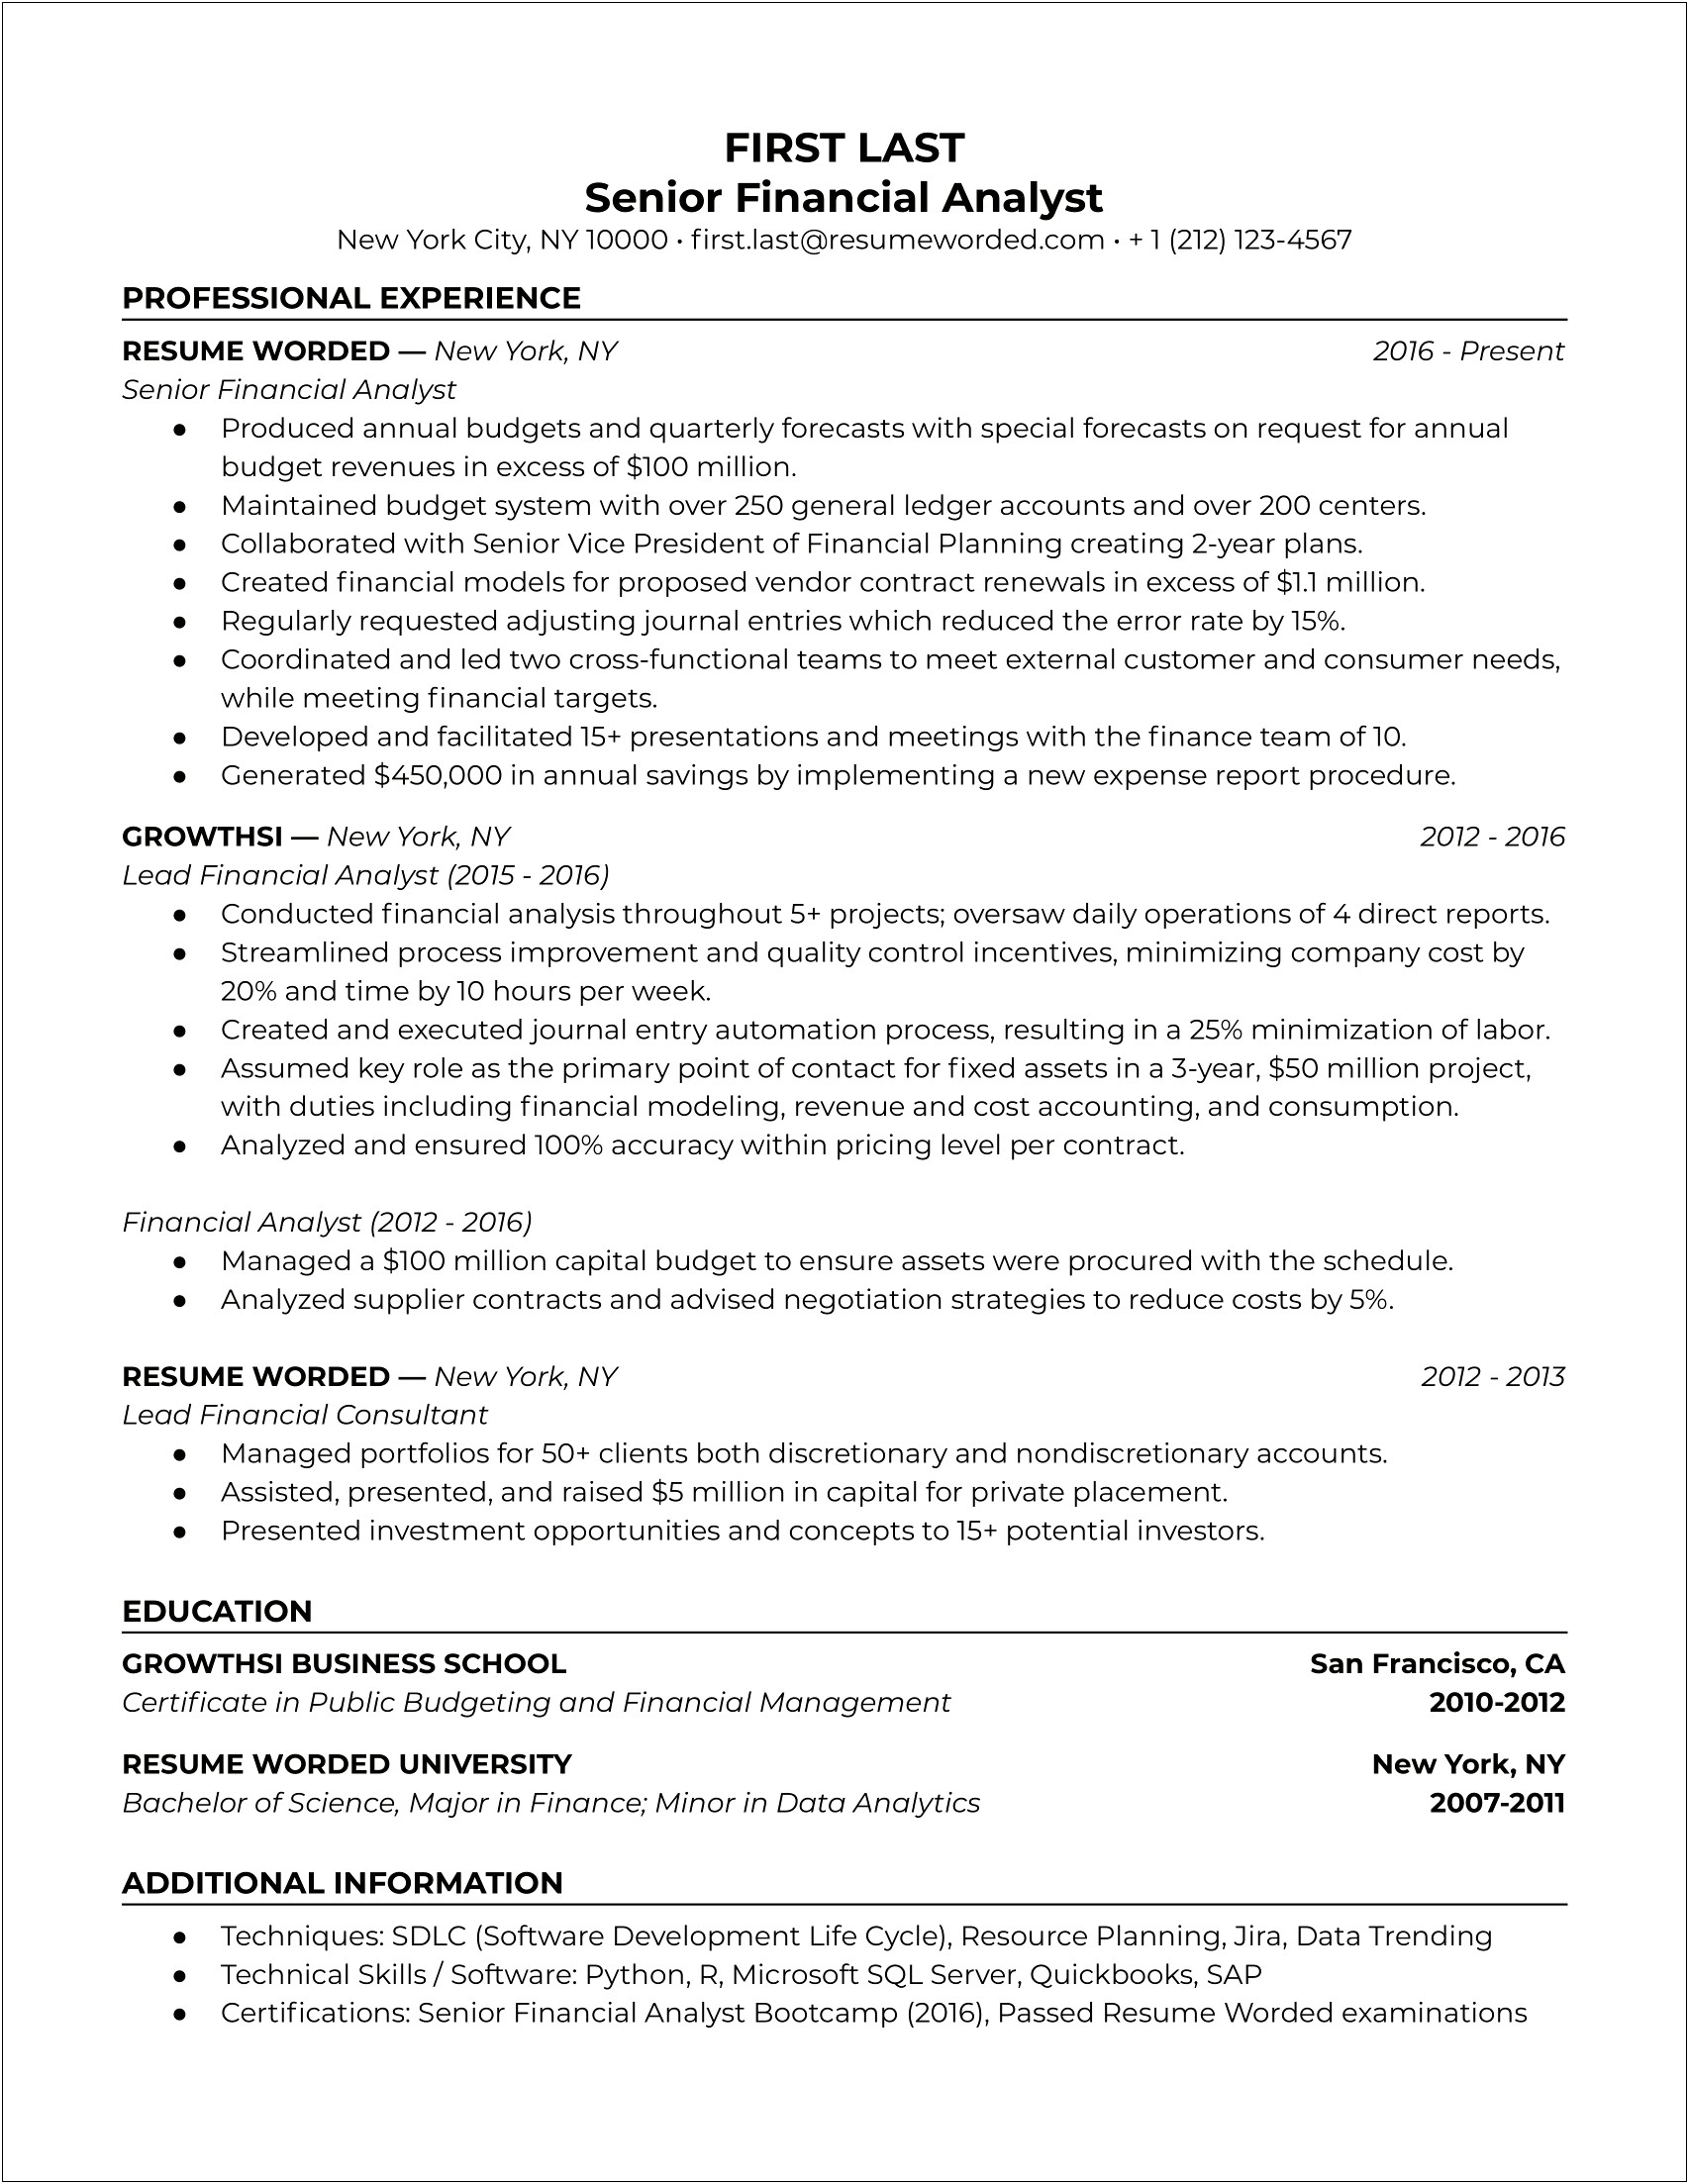 Junior Financial Analyst Job Resume